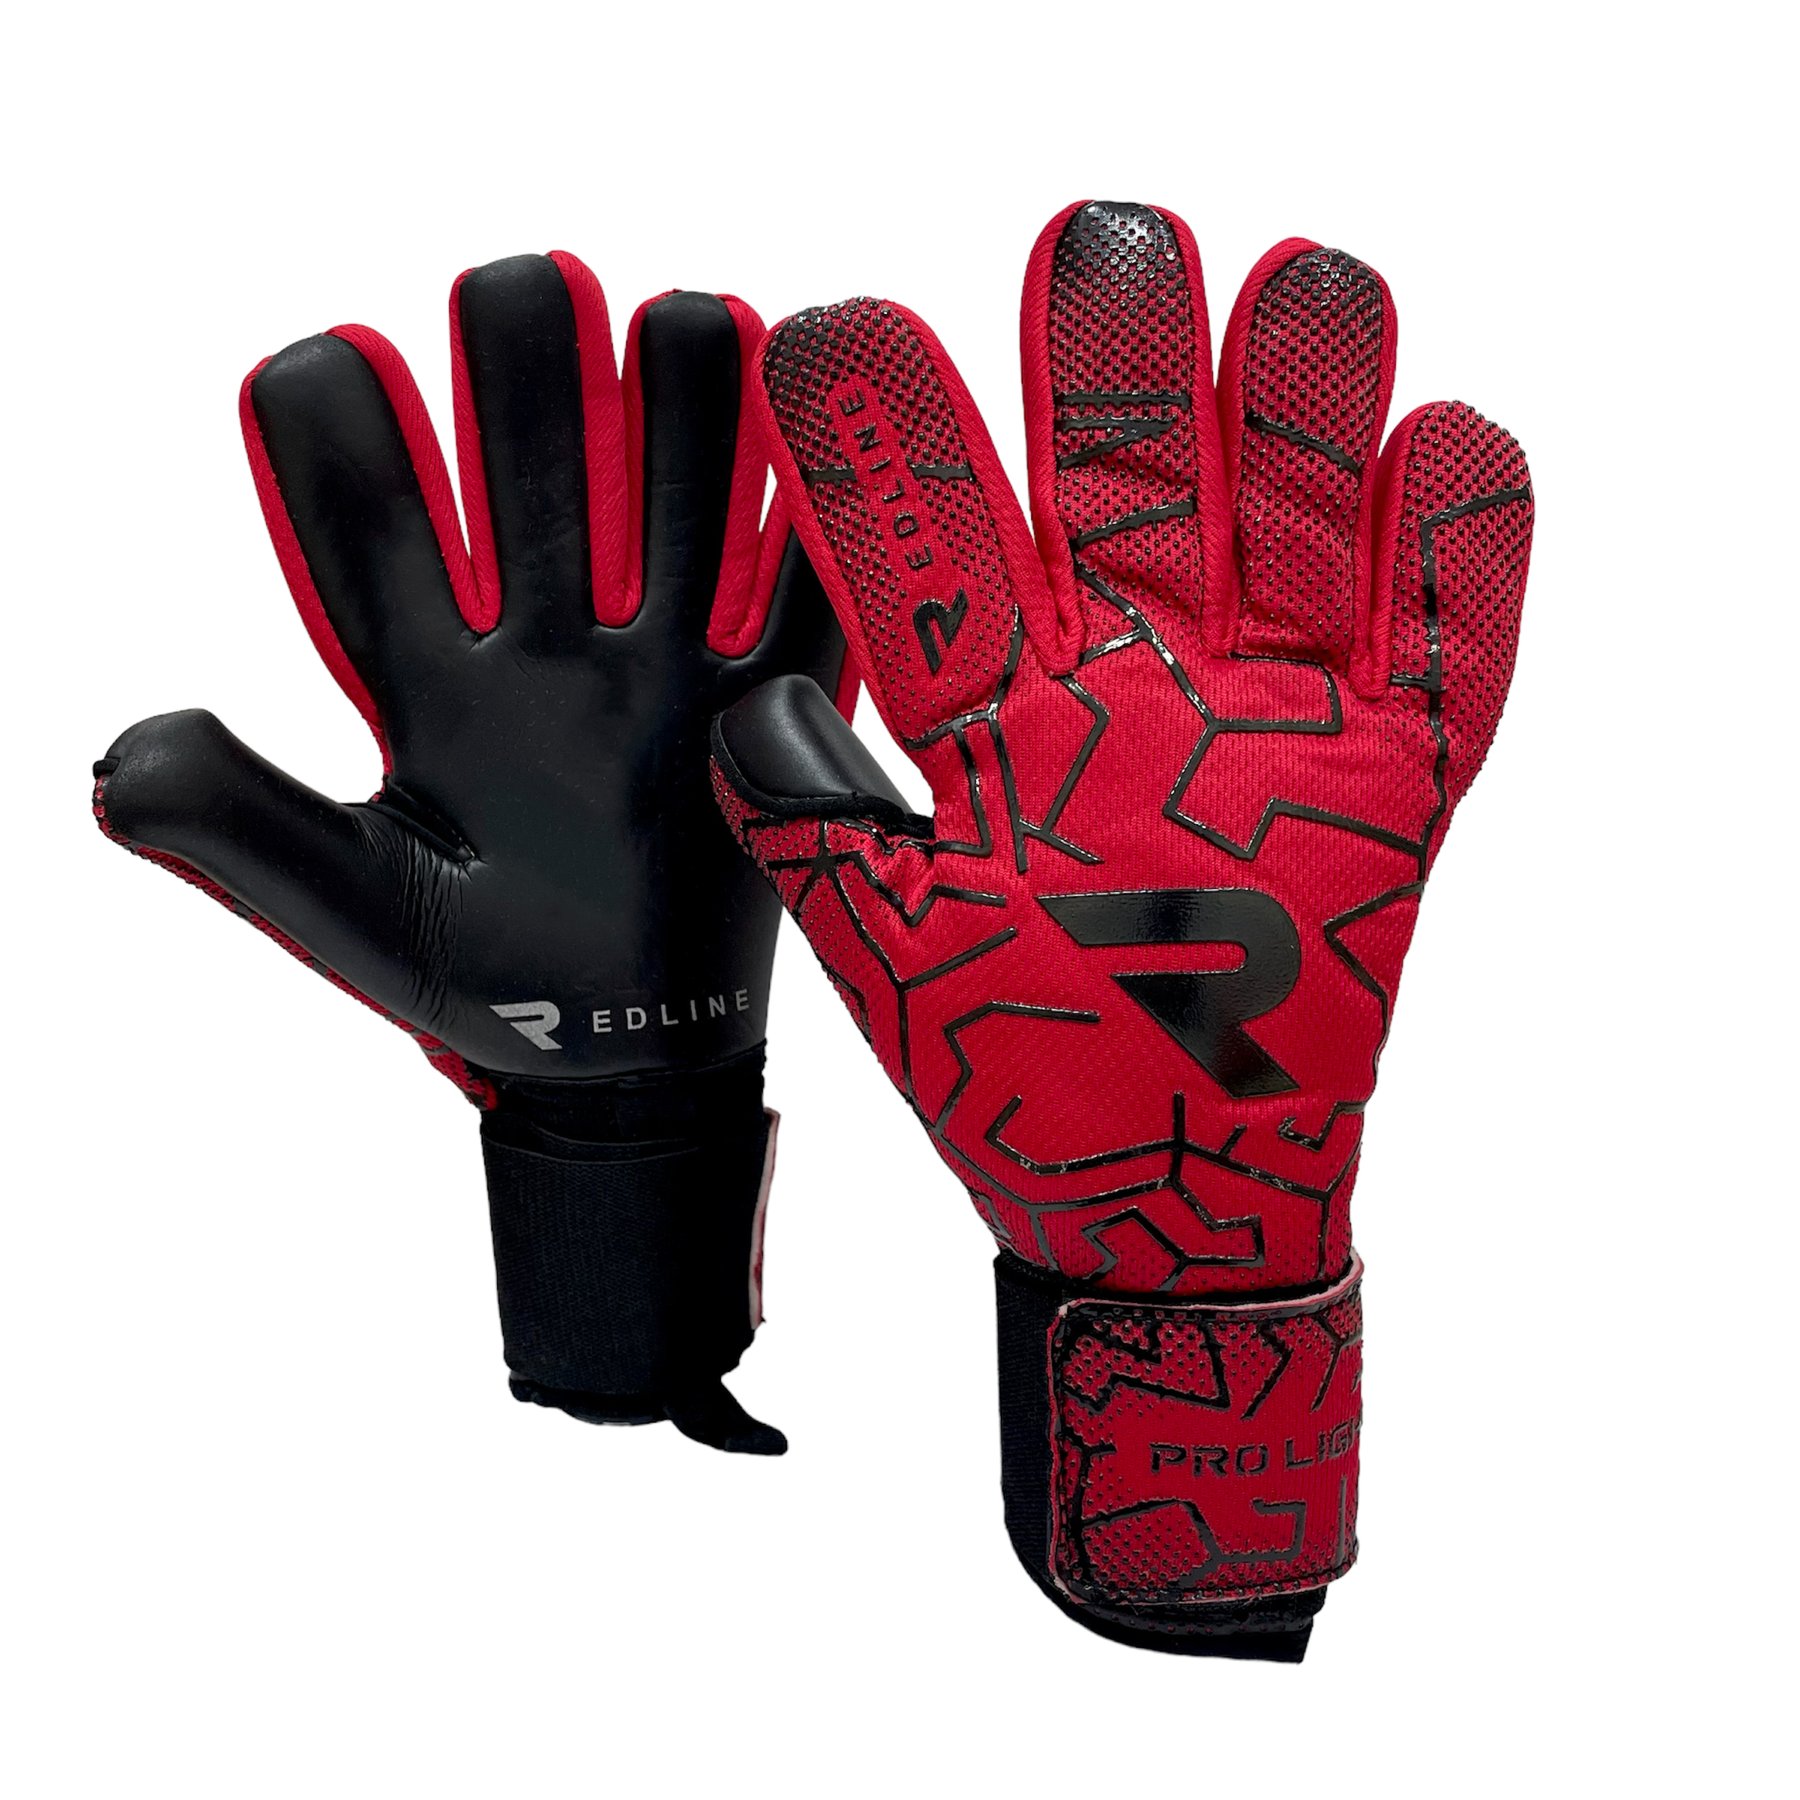 Воротарські рукавиці Redline Pro Ligth Red Black купити